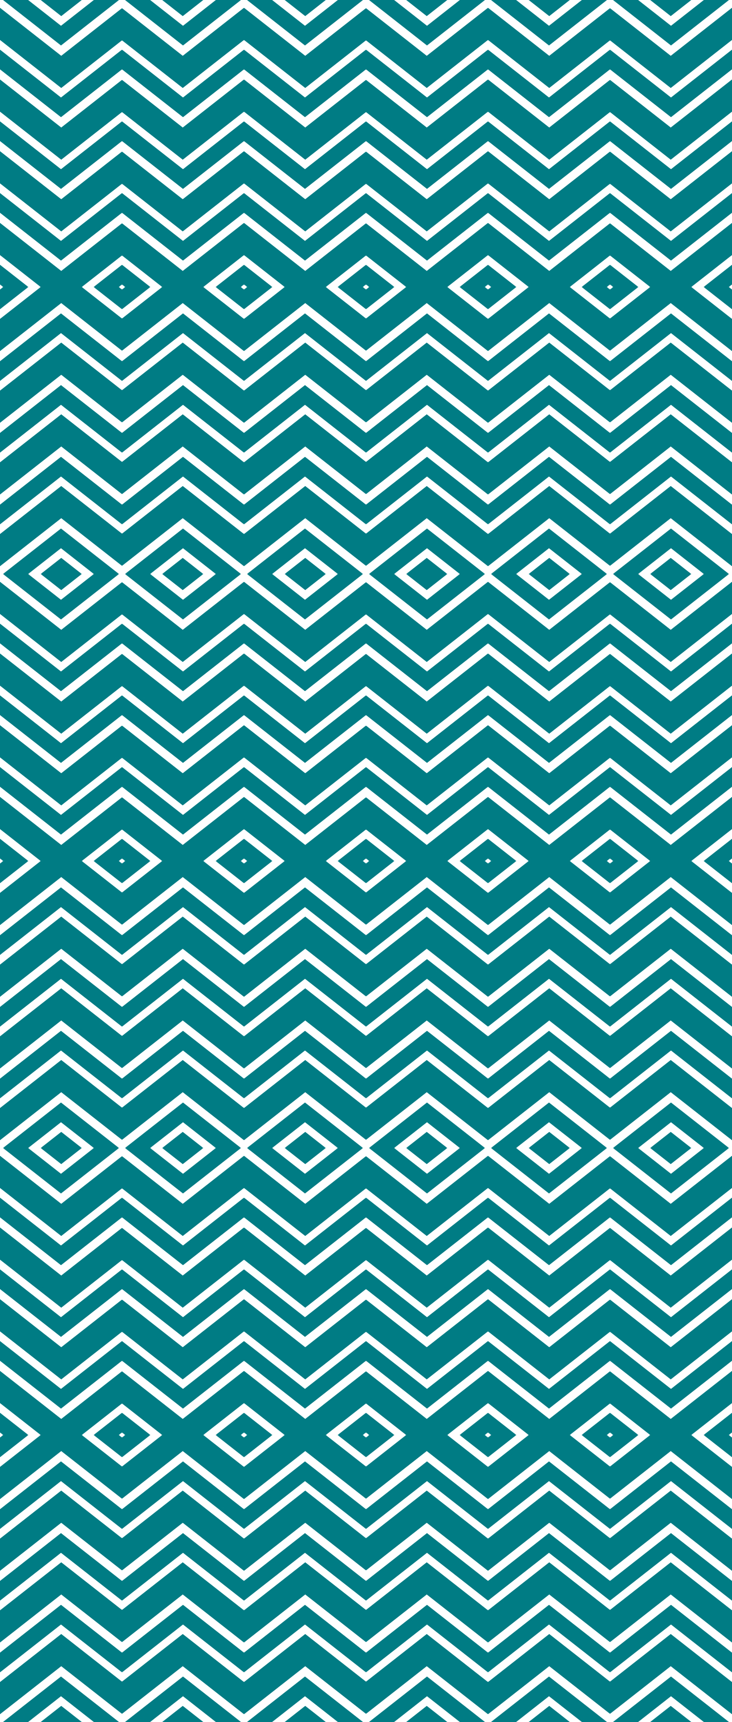 teal chevron wallpaper,pattern,aqua,blue,green,turquoise